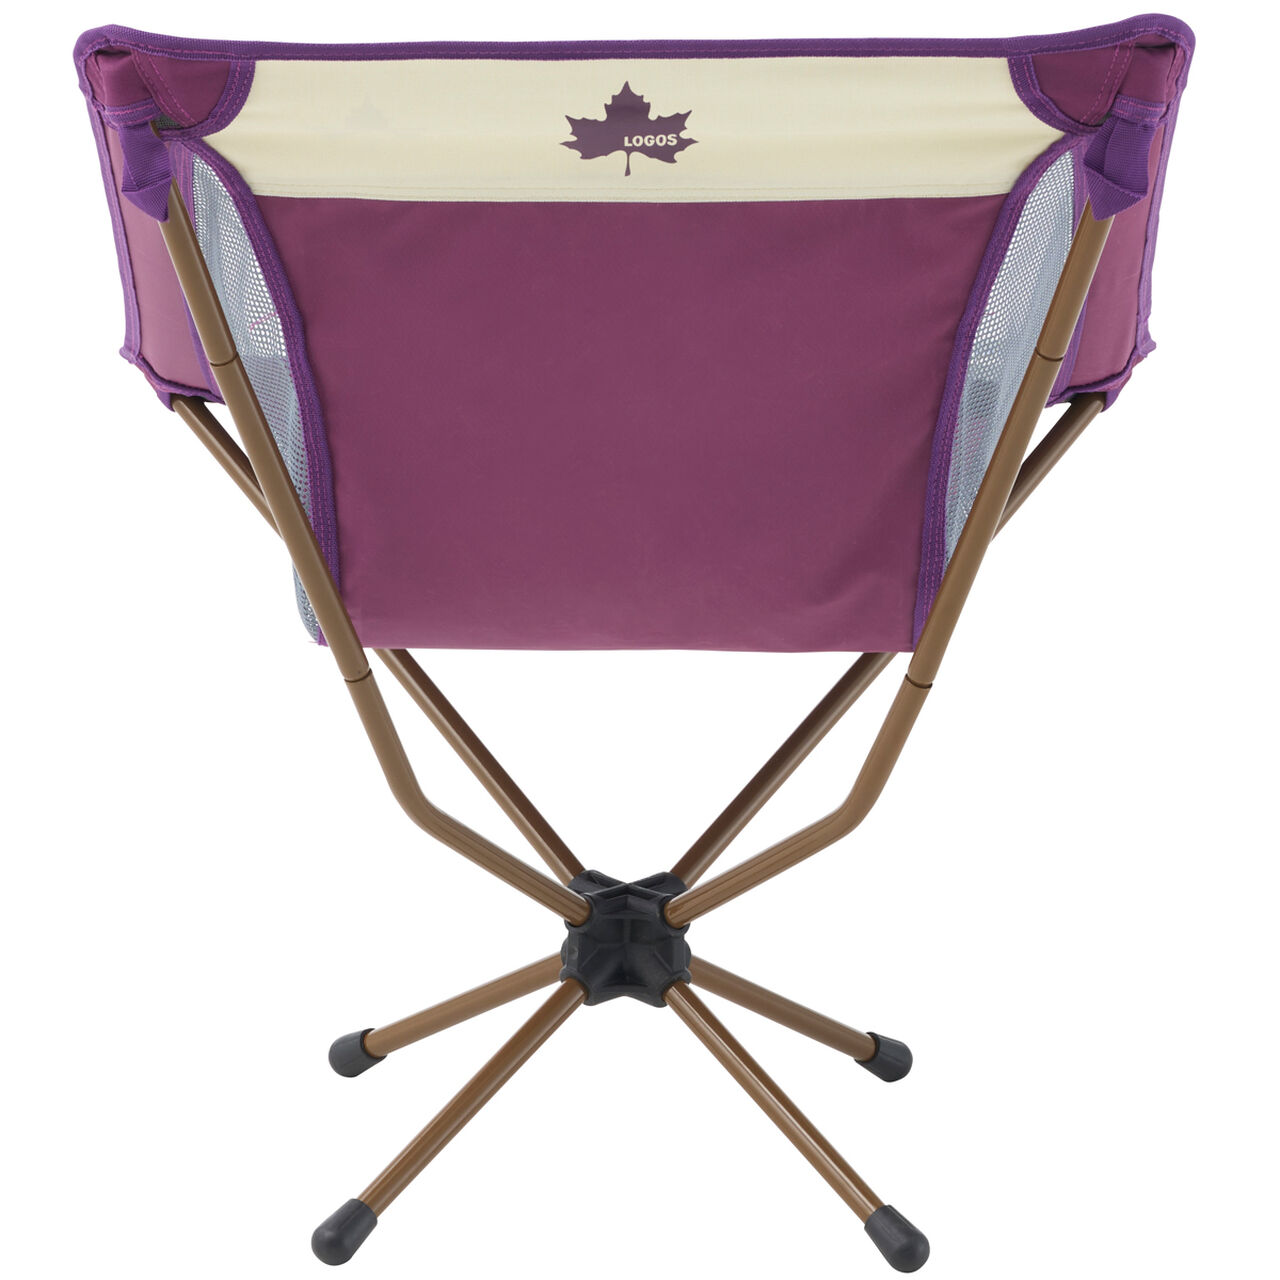 LOGOS Life Bucket Chair (Colorful Logos),Purple, large image number 6